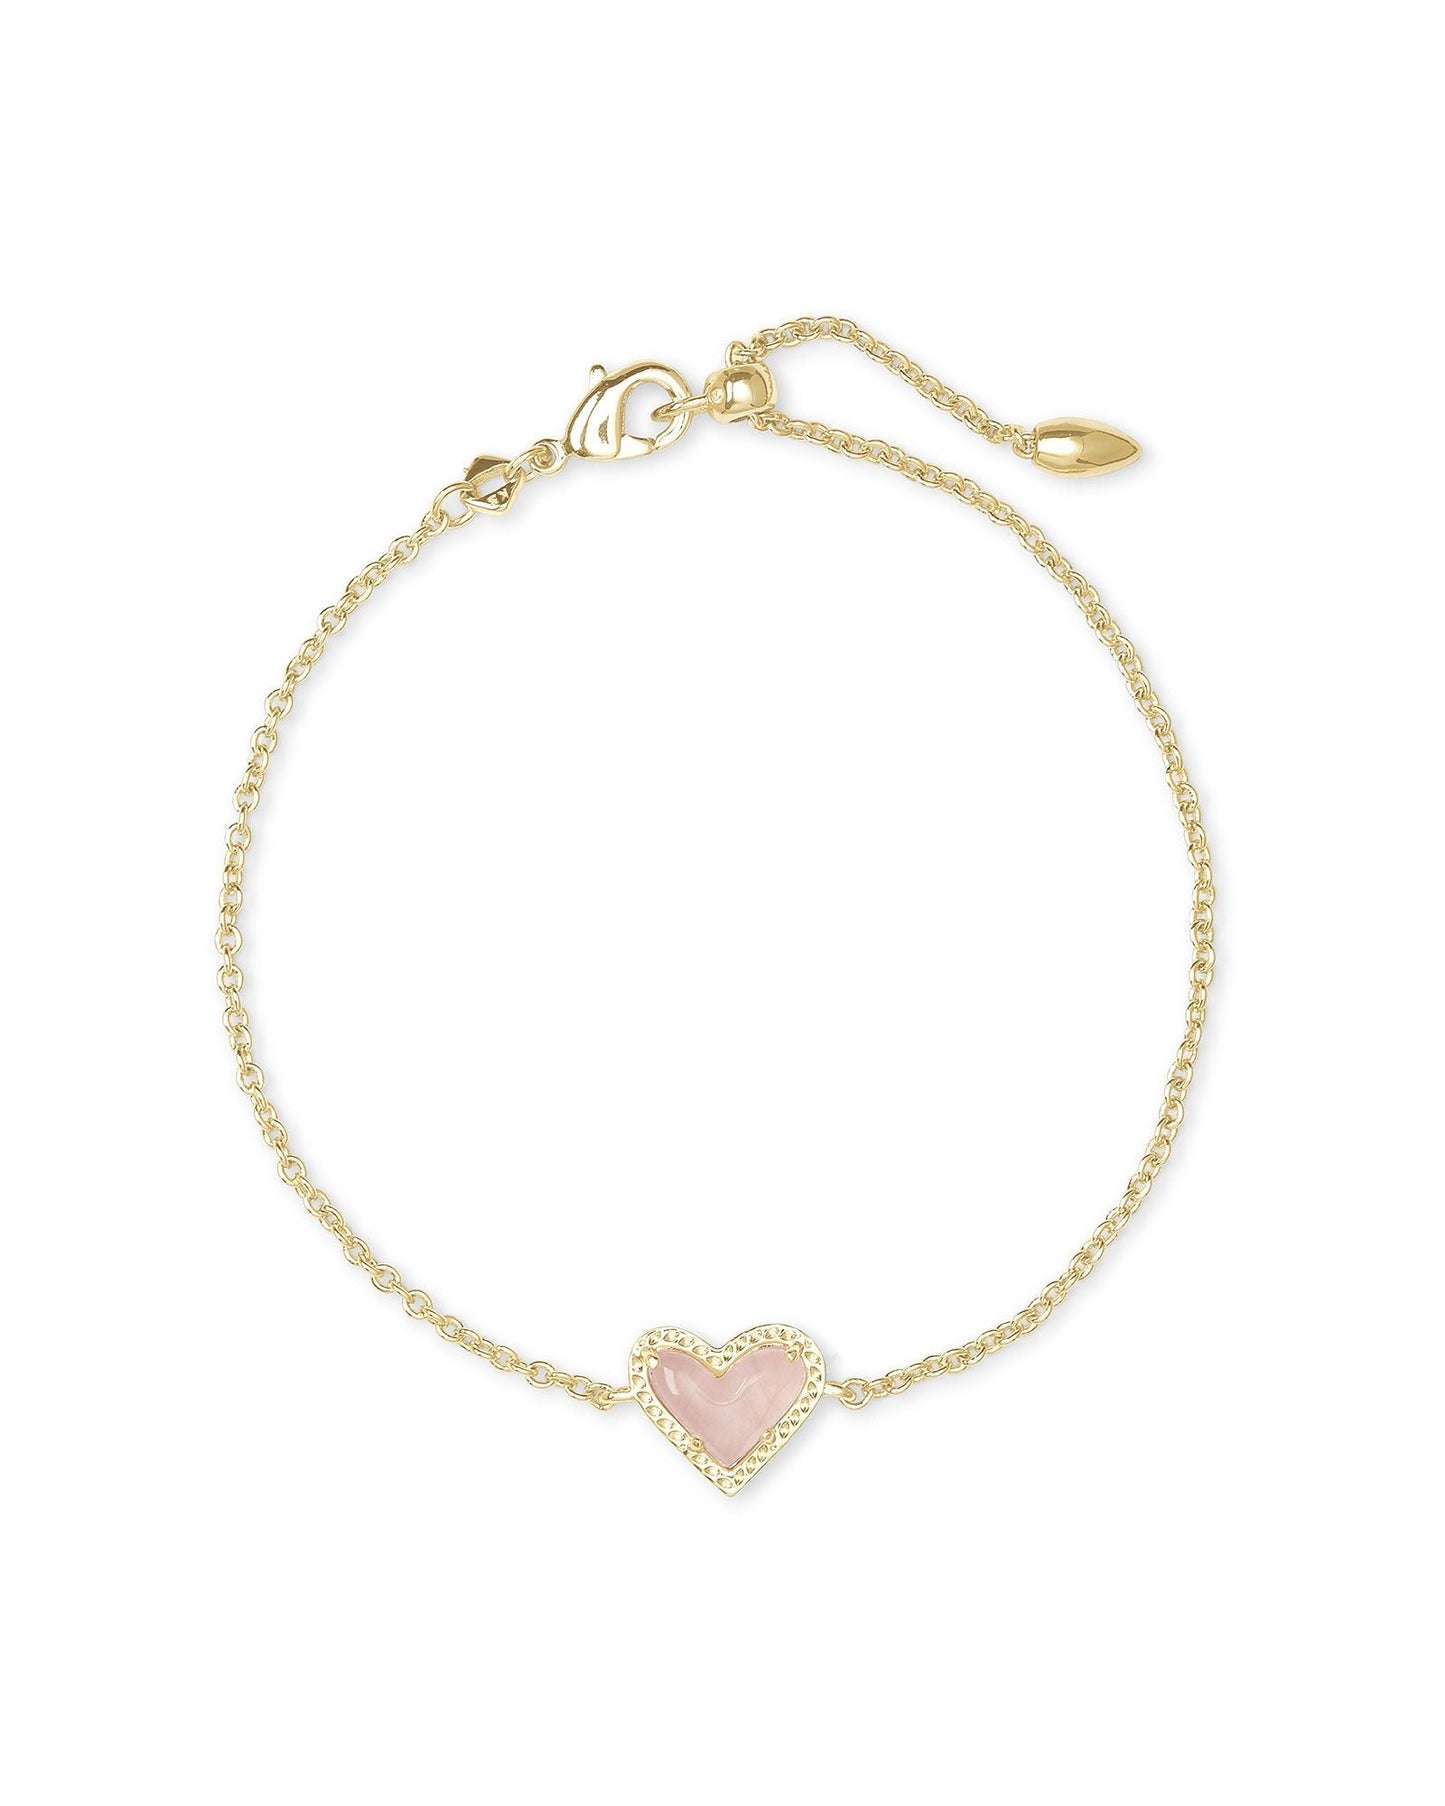 Ari Heart Delicate Chain Bracelet Gold Rose Quartz